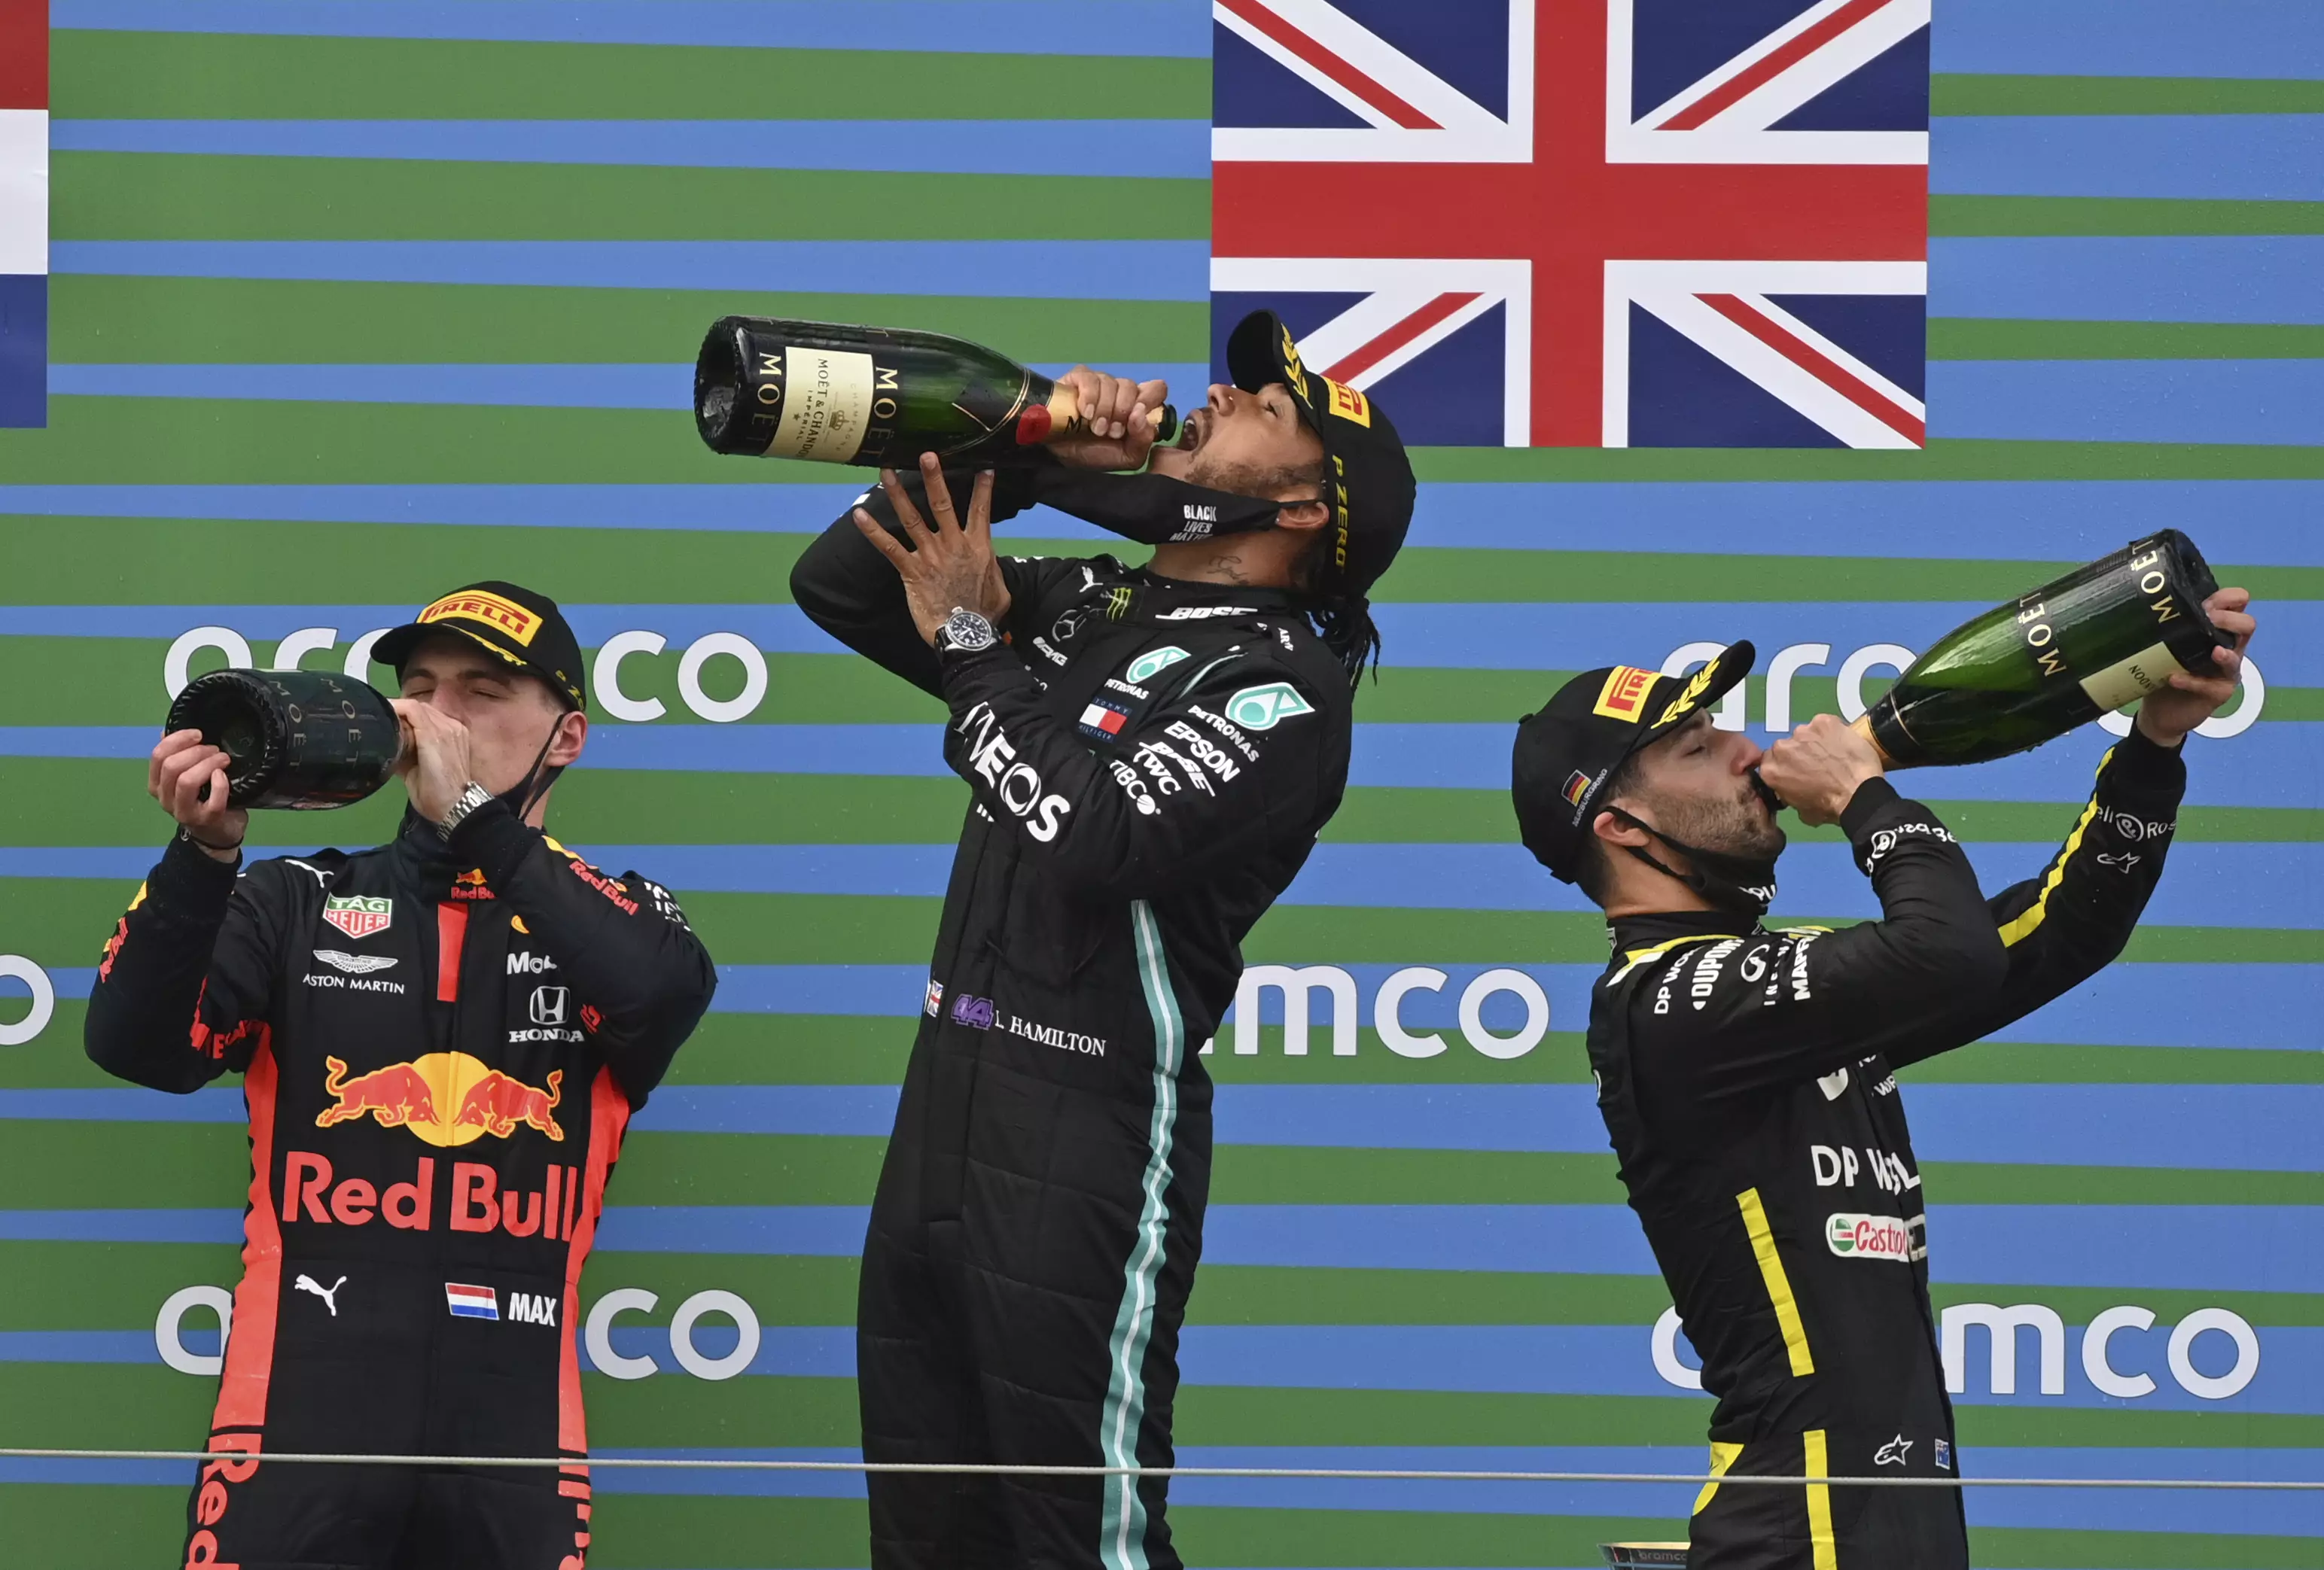 Daniel Ricciardo joined Max Verstappen and Lewis Hamilton on the podium.